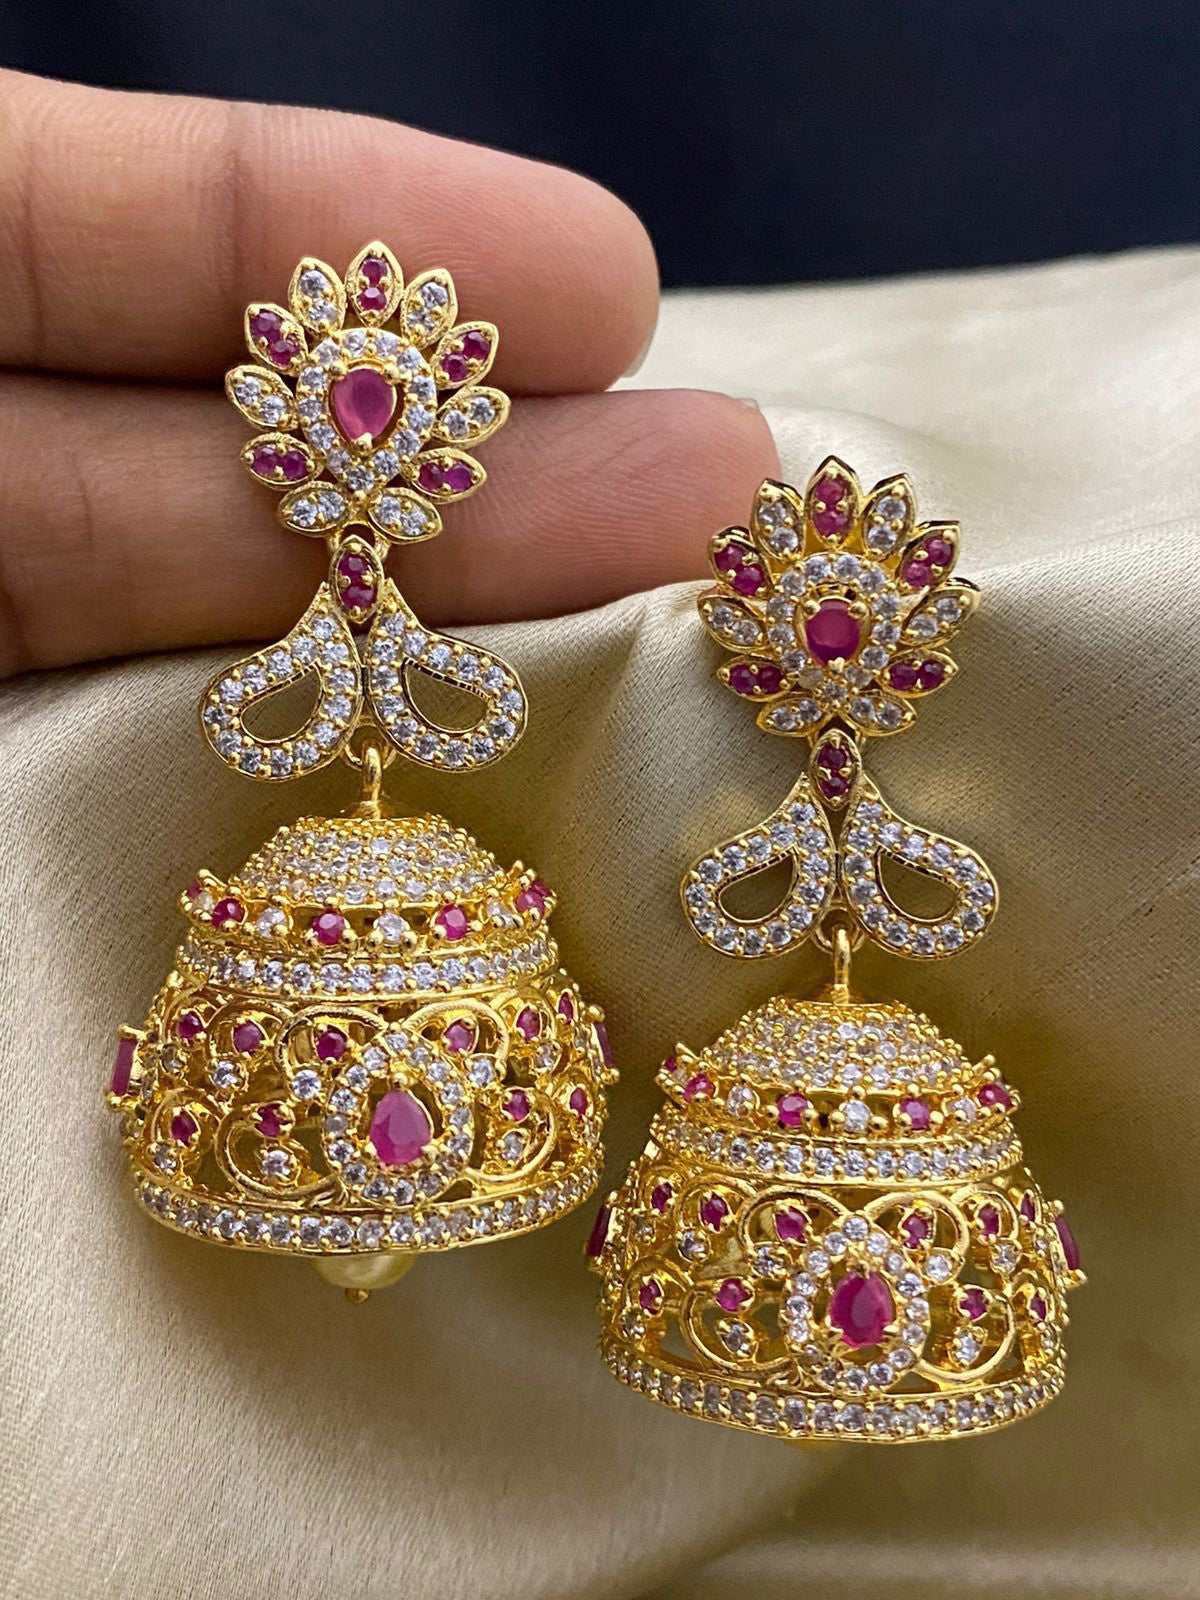 22K Gold Hoop Earrings - Jhumkas (Buttalu) - Gold Dangle Earrings With  Color Stones (Temple Jewellery) - 235-GJH2508 in 14.700 Grams